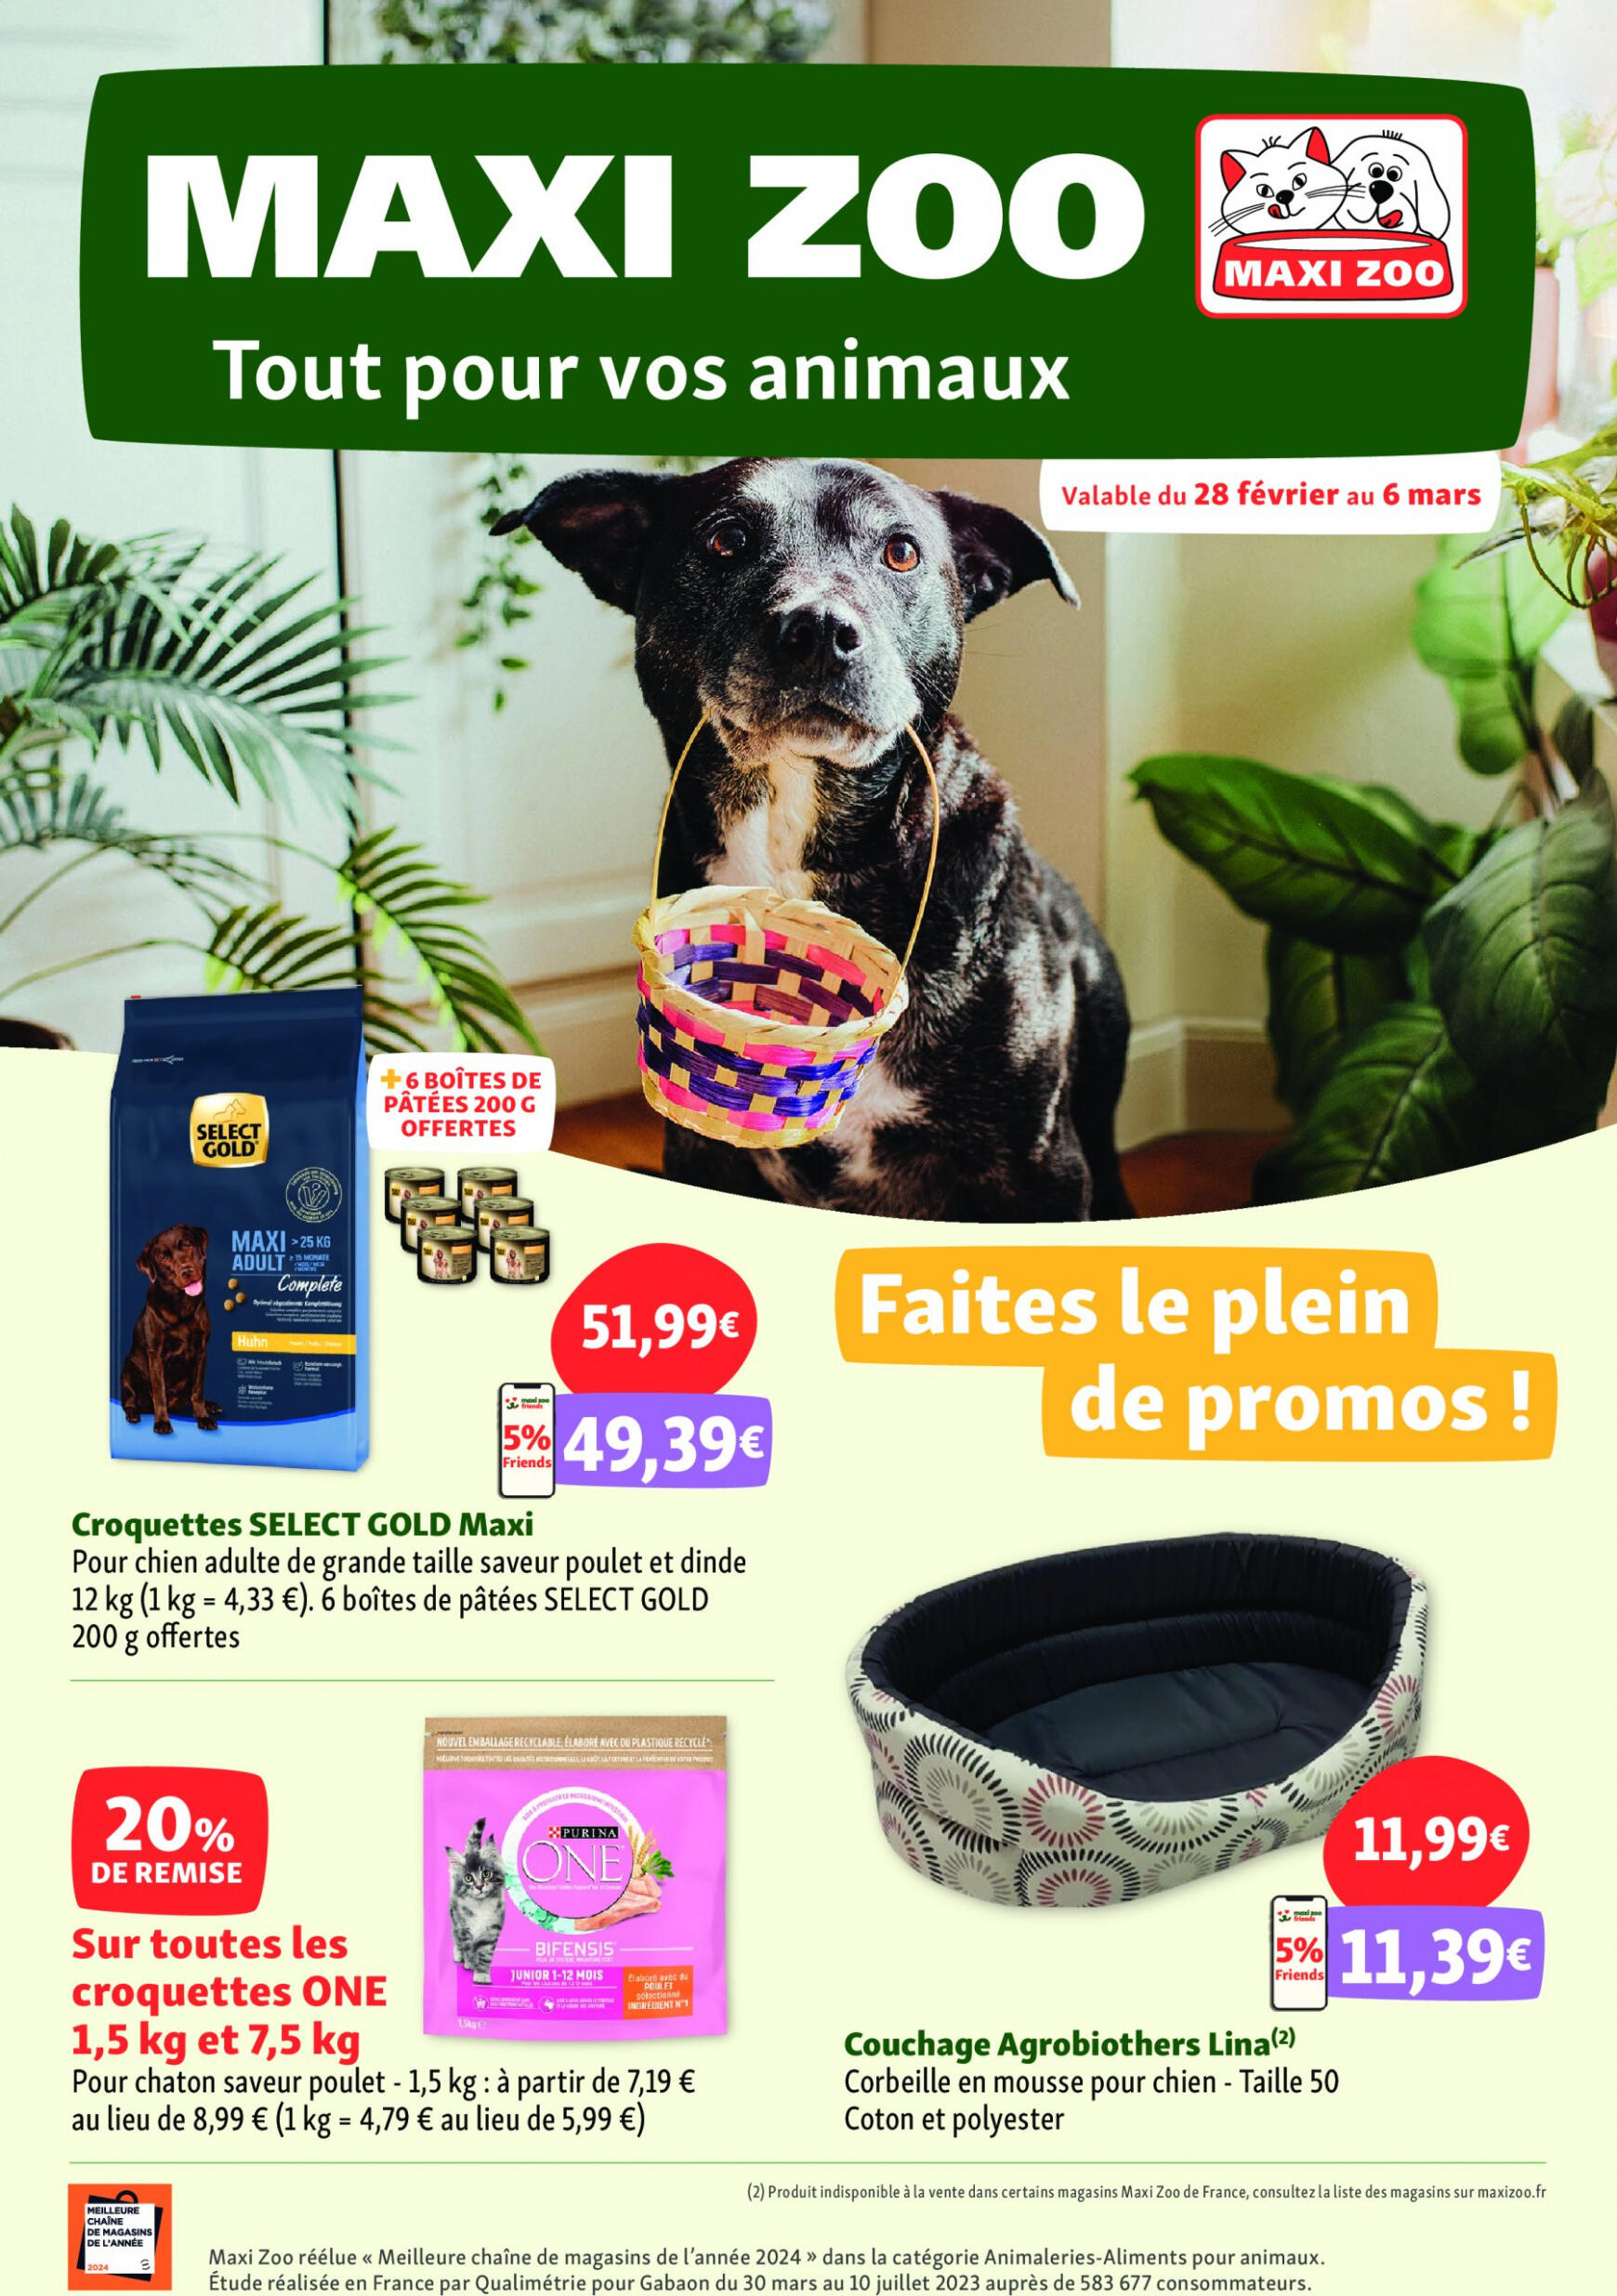 maxizoo - Maxizoo - MAXI ZOO Tout pour vos animaux valable à partir de 28.02.2024